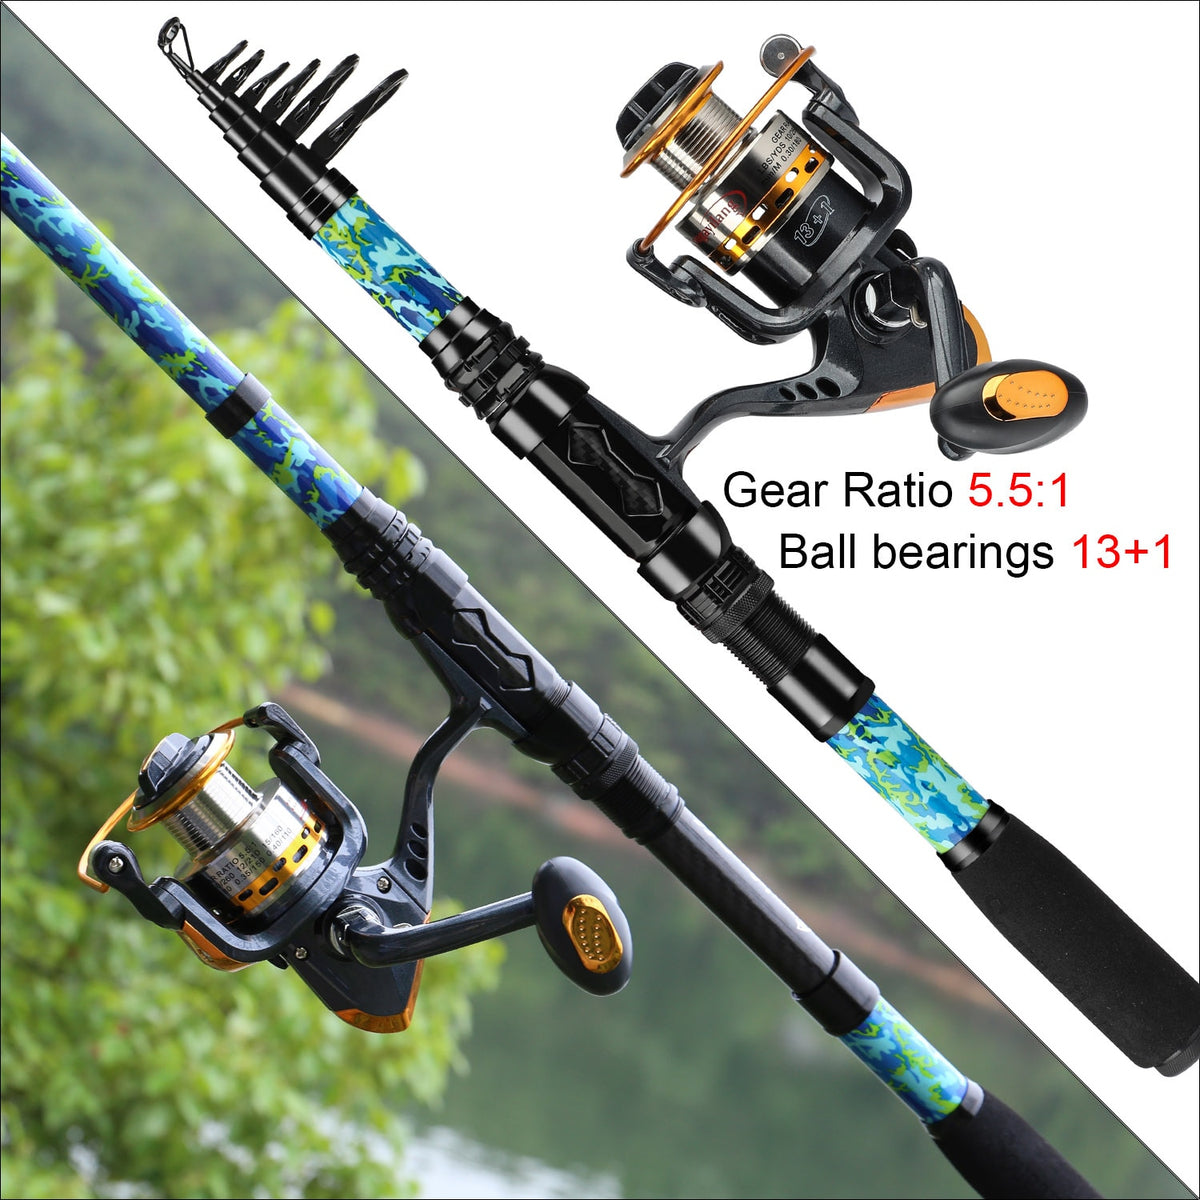 Sougayilang 1.8-3.6m Telescopic Fishing Rod and 11BB Fishing Reel Set